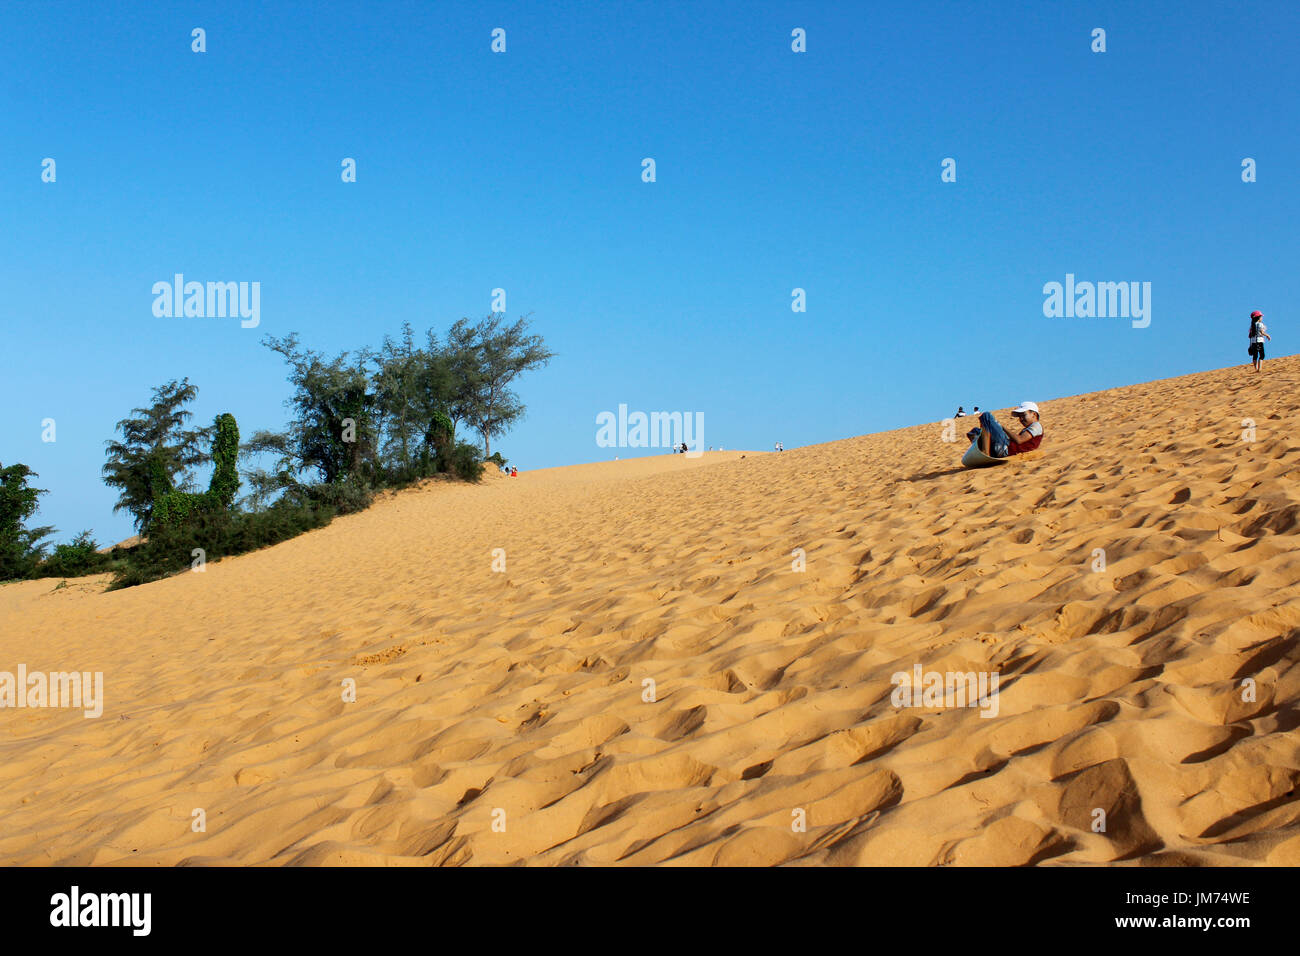 Go sandboarding on the red dunes of Mui Ne